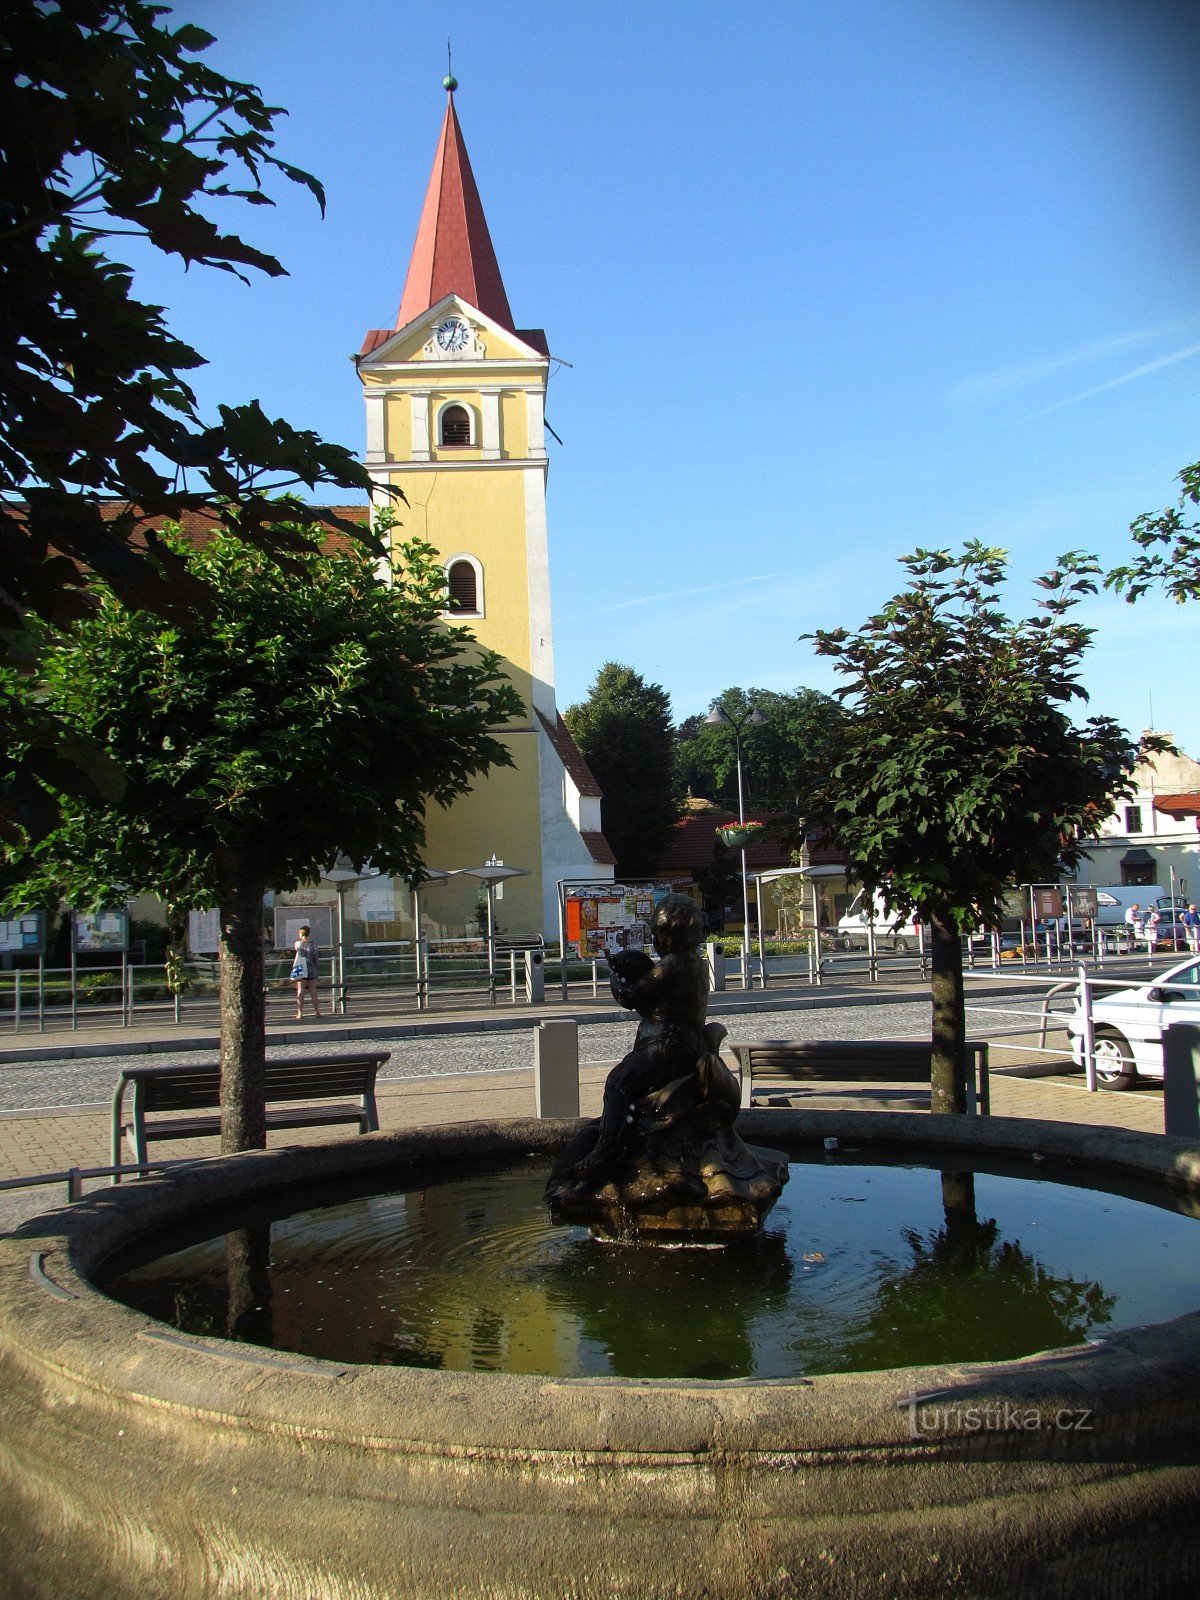 Koryčany - fontein en kerk